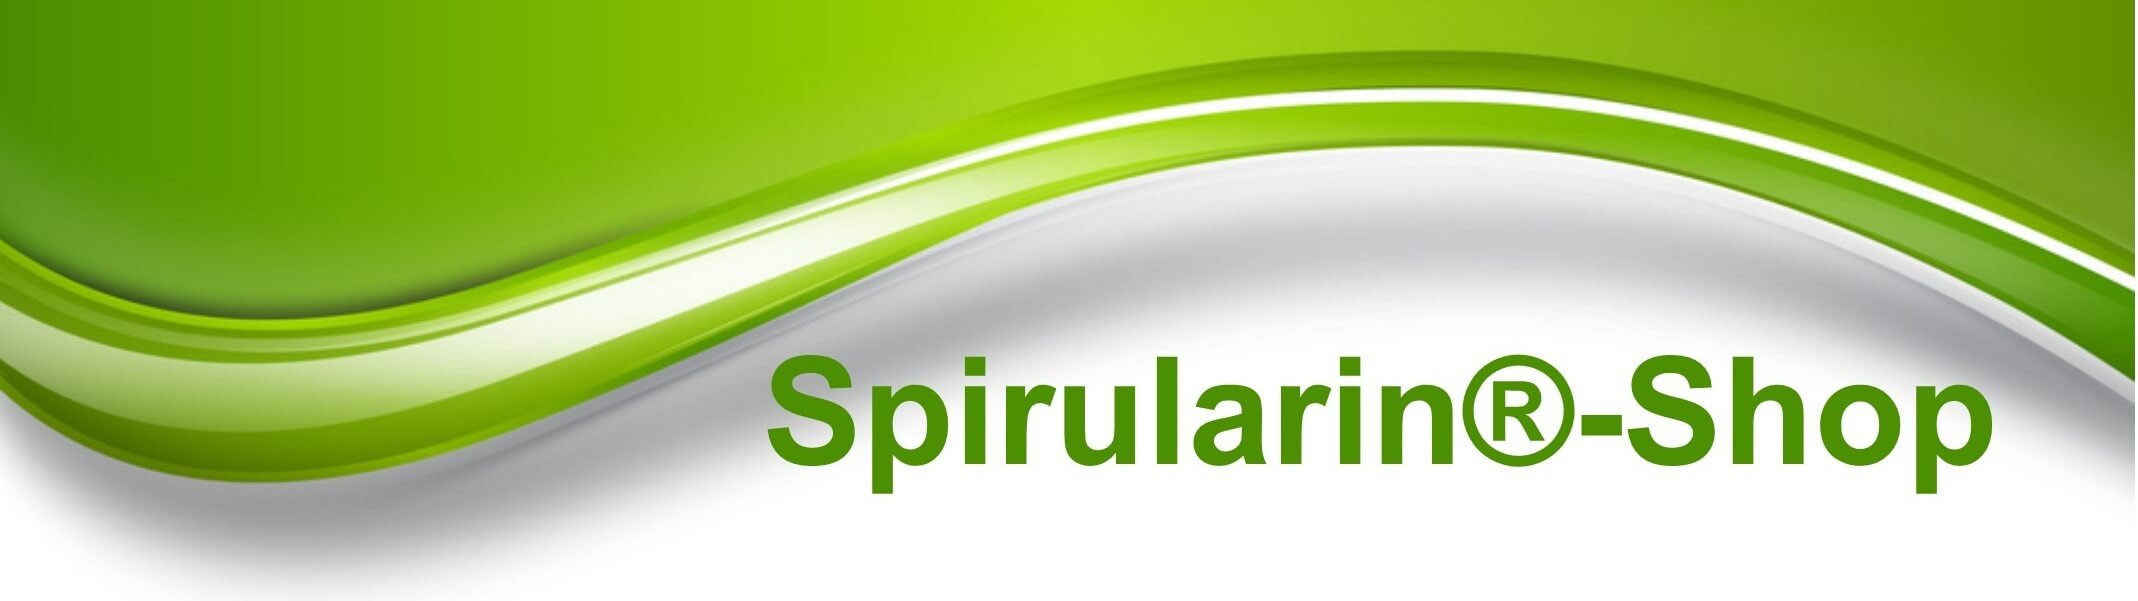 Spirularin-Shop-Logo